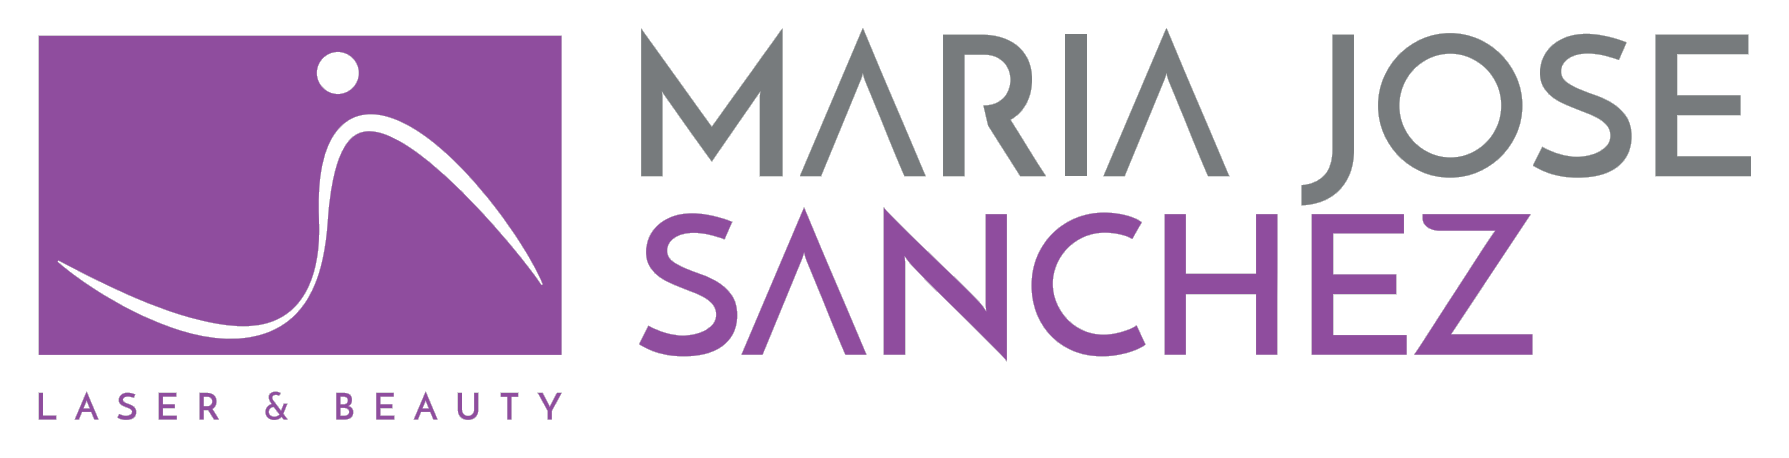 MARIA JOSE SANCHEZ